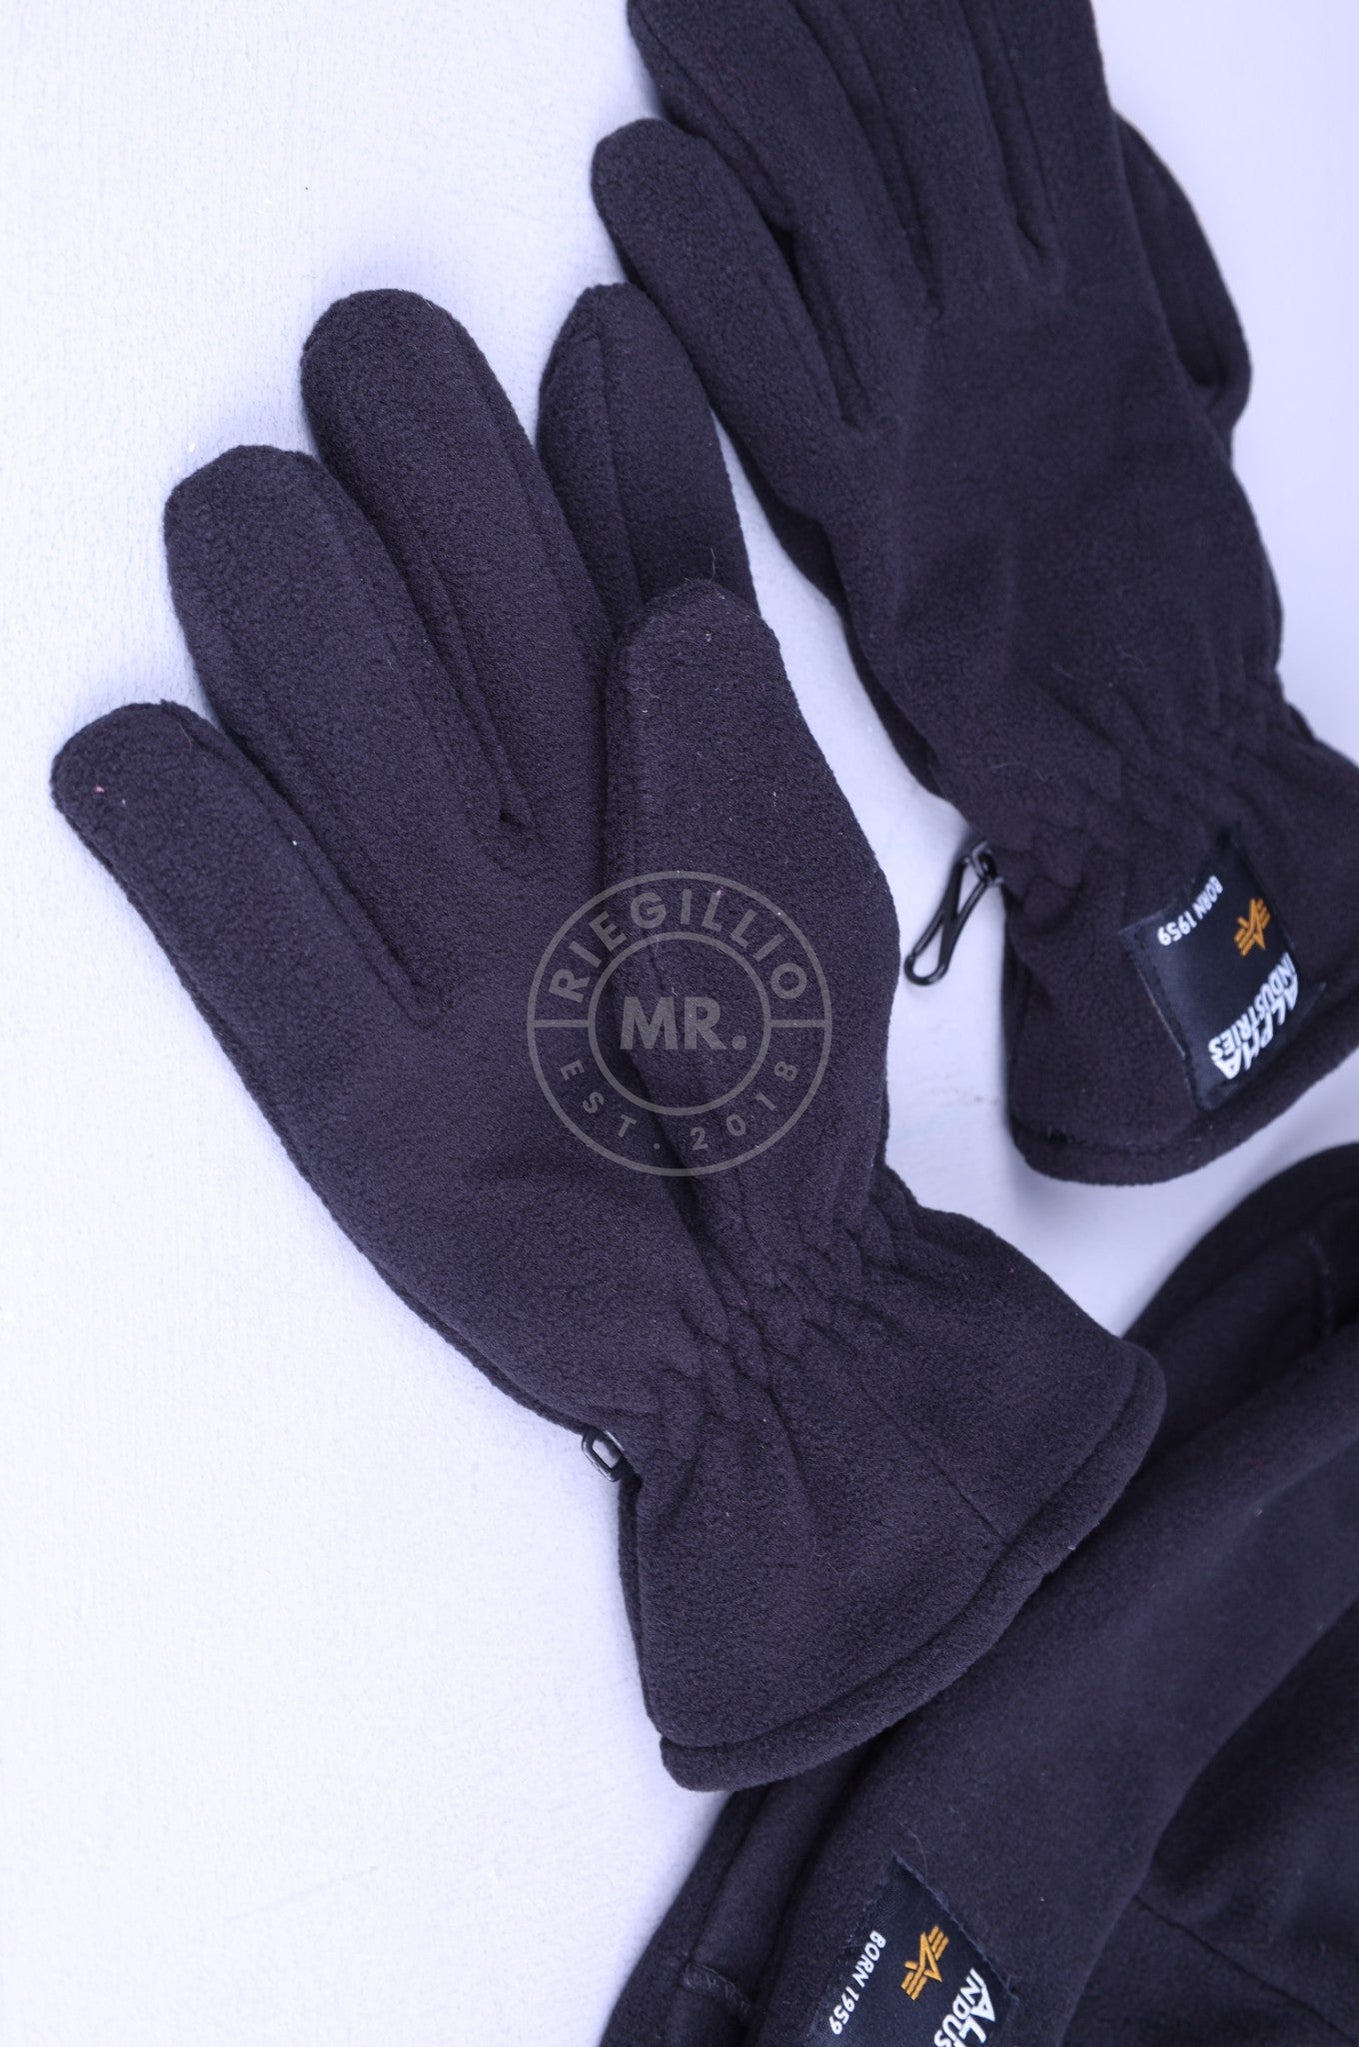 Alpha Industries Label Fleece Set - Black at MR. Riegillio